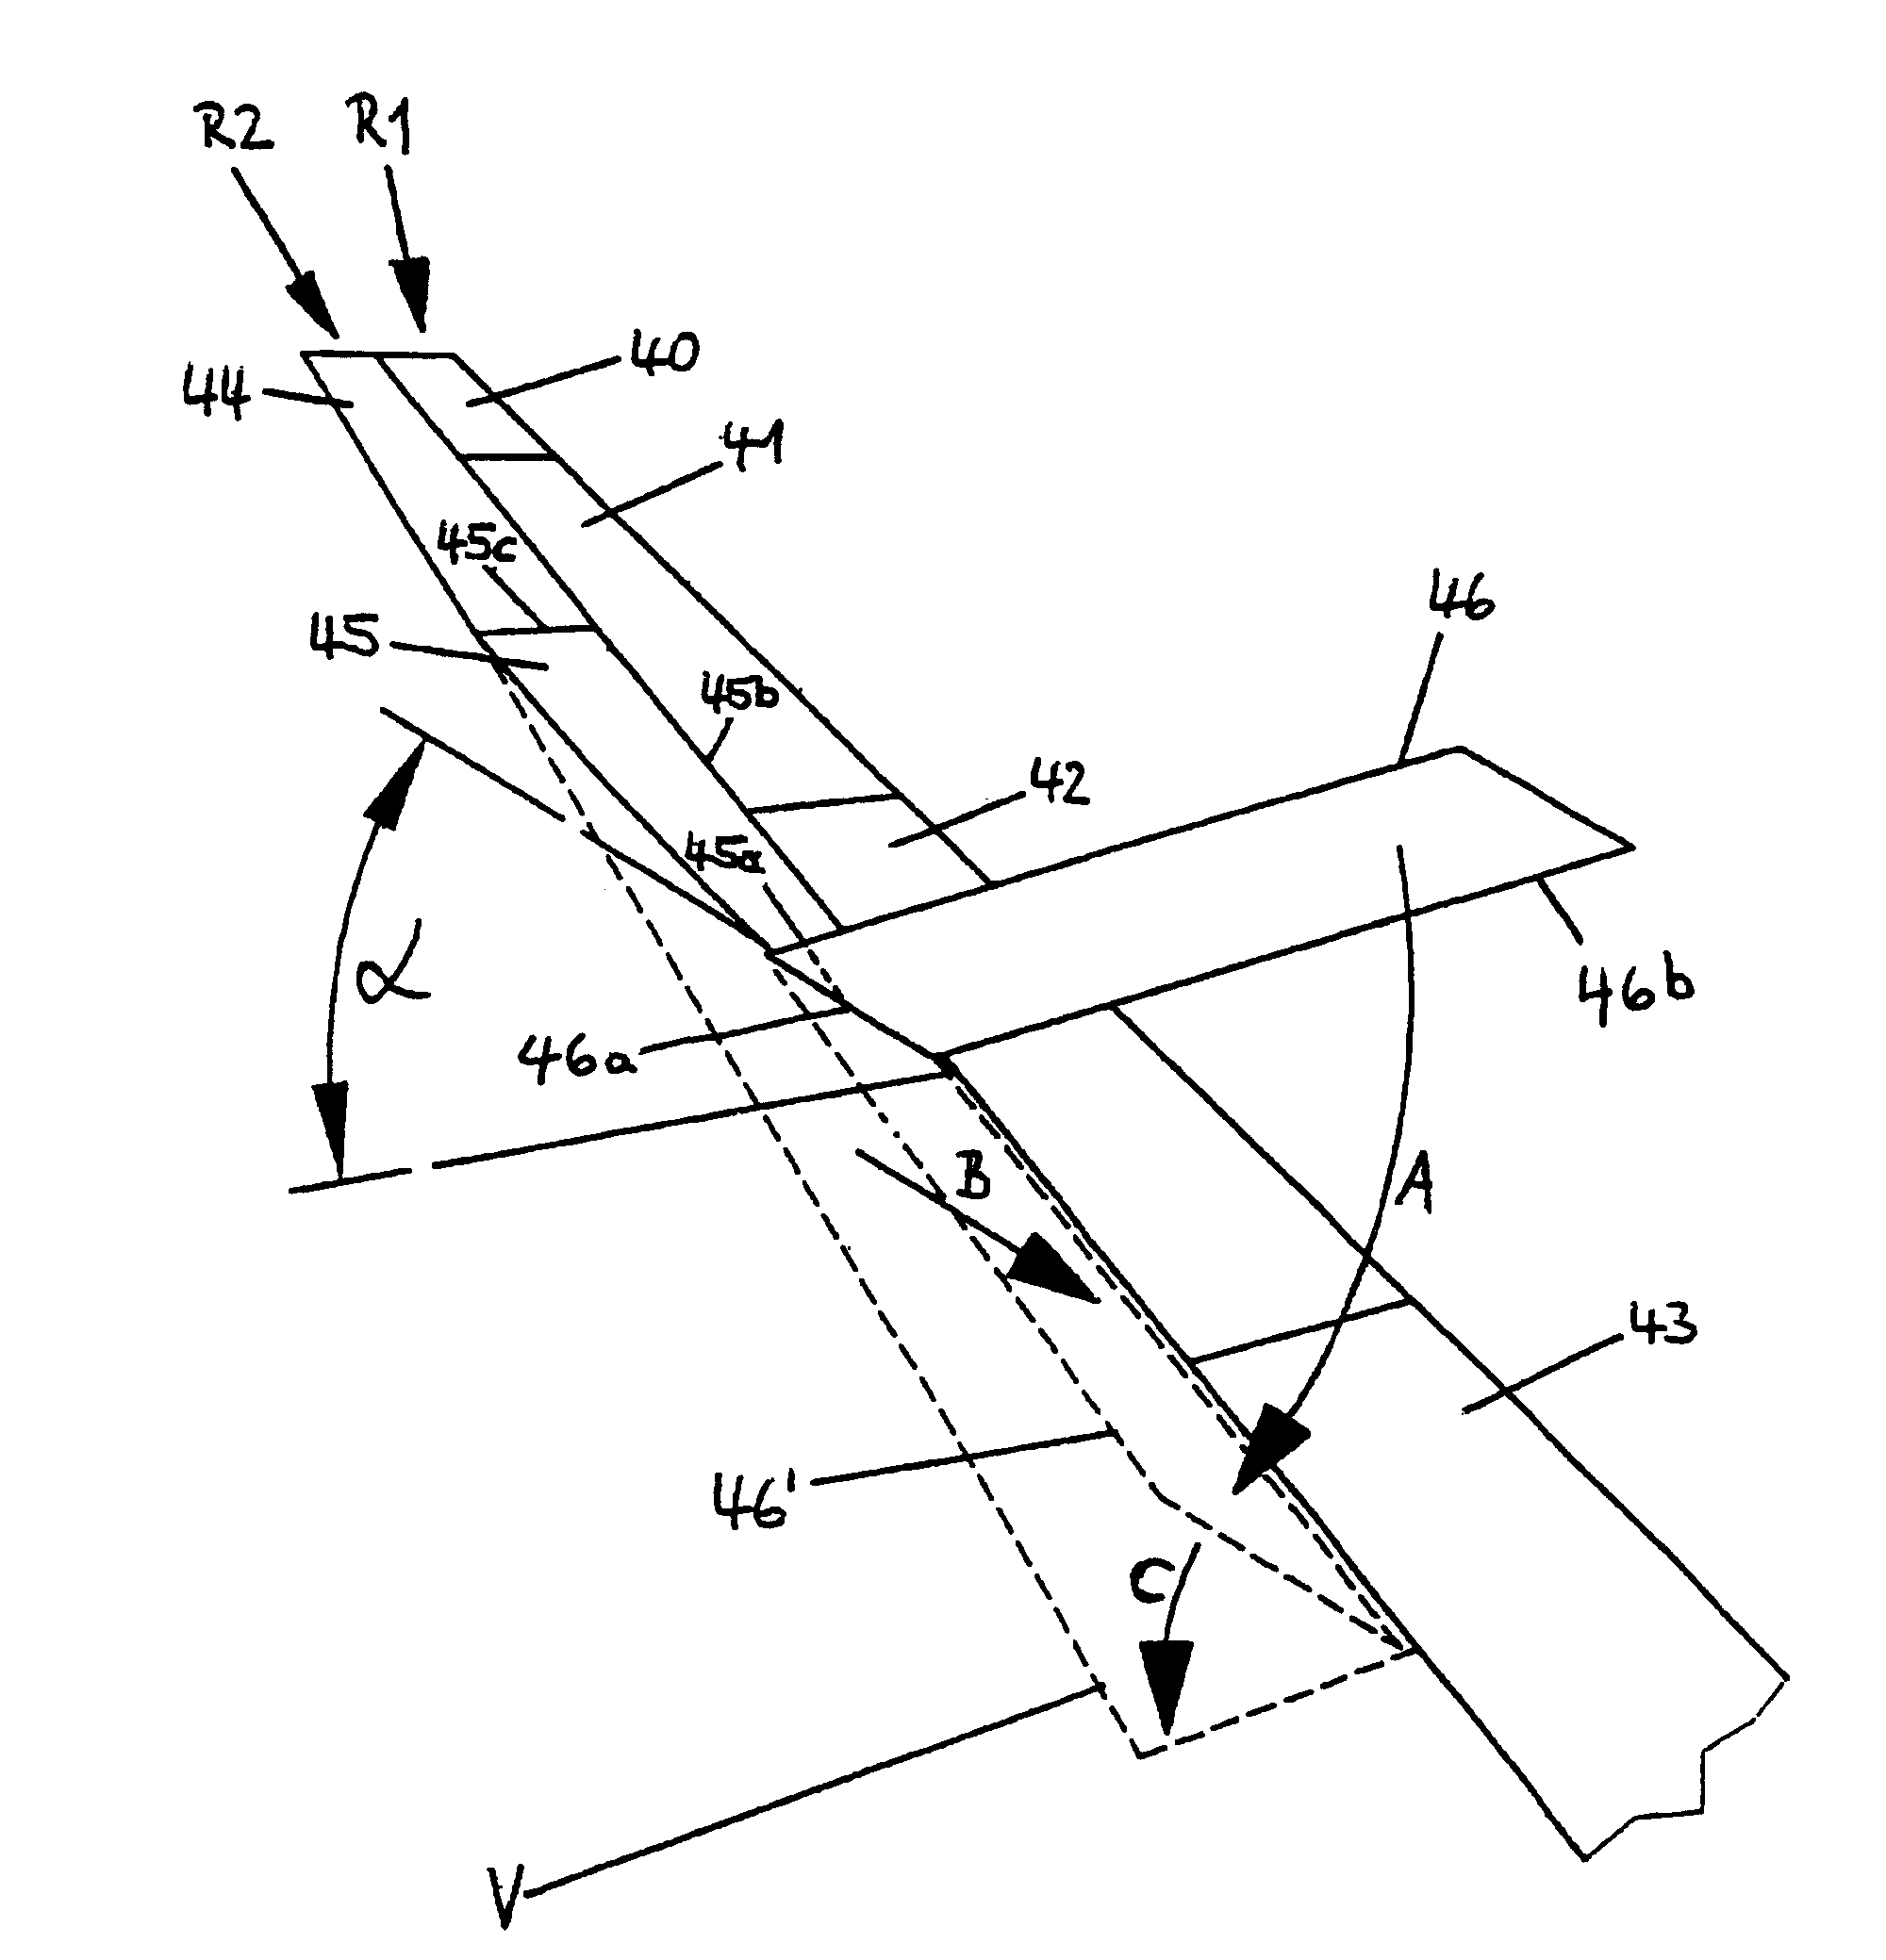 Method for laying and interlocking panels